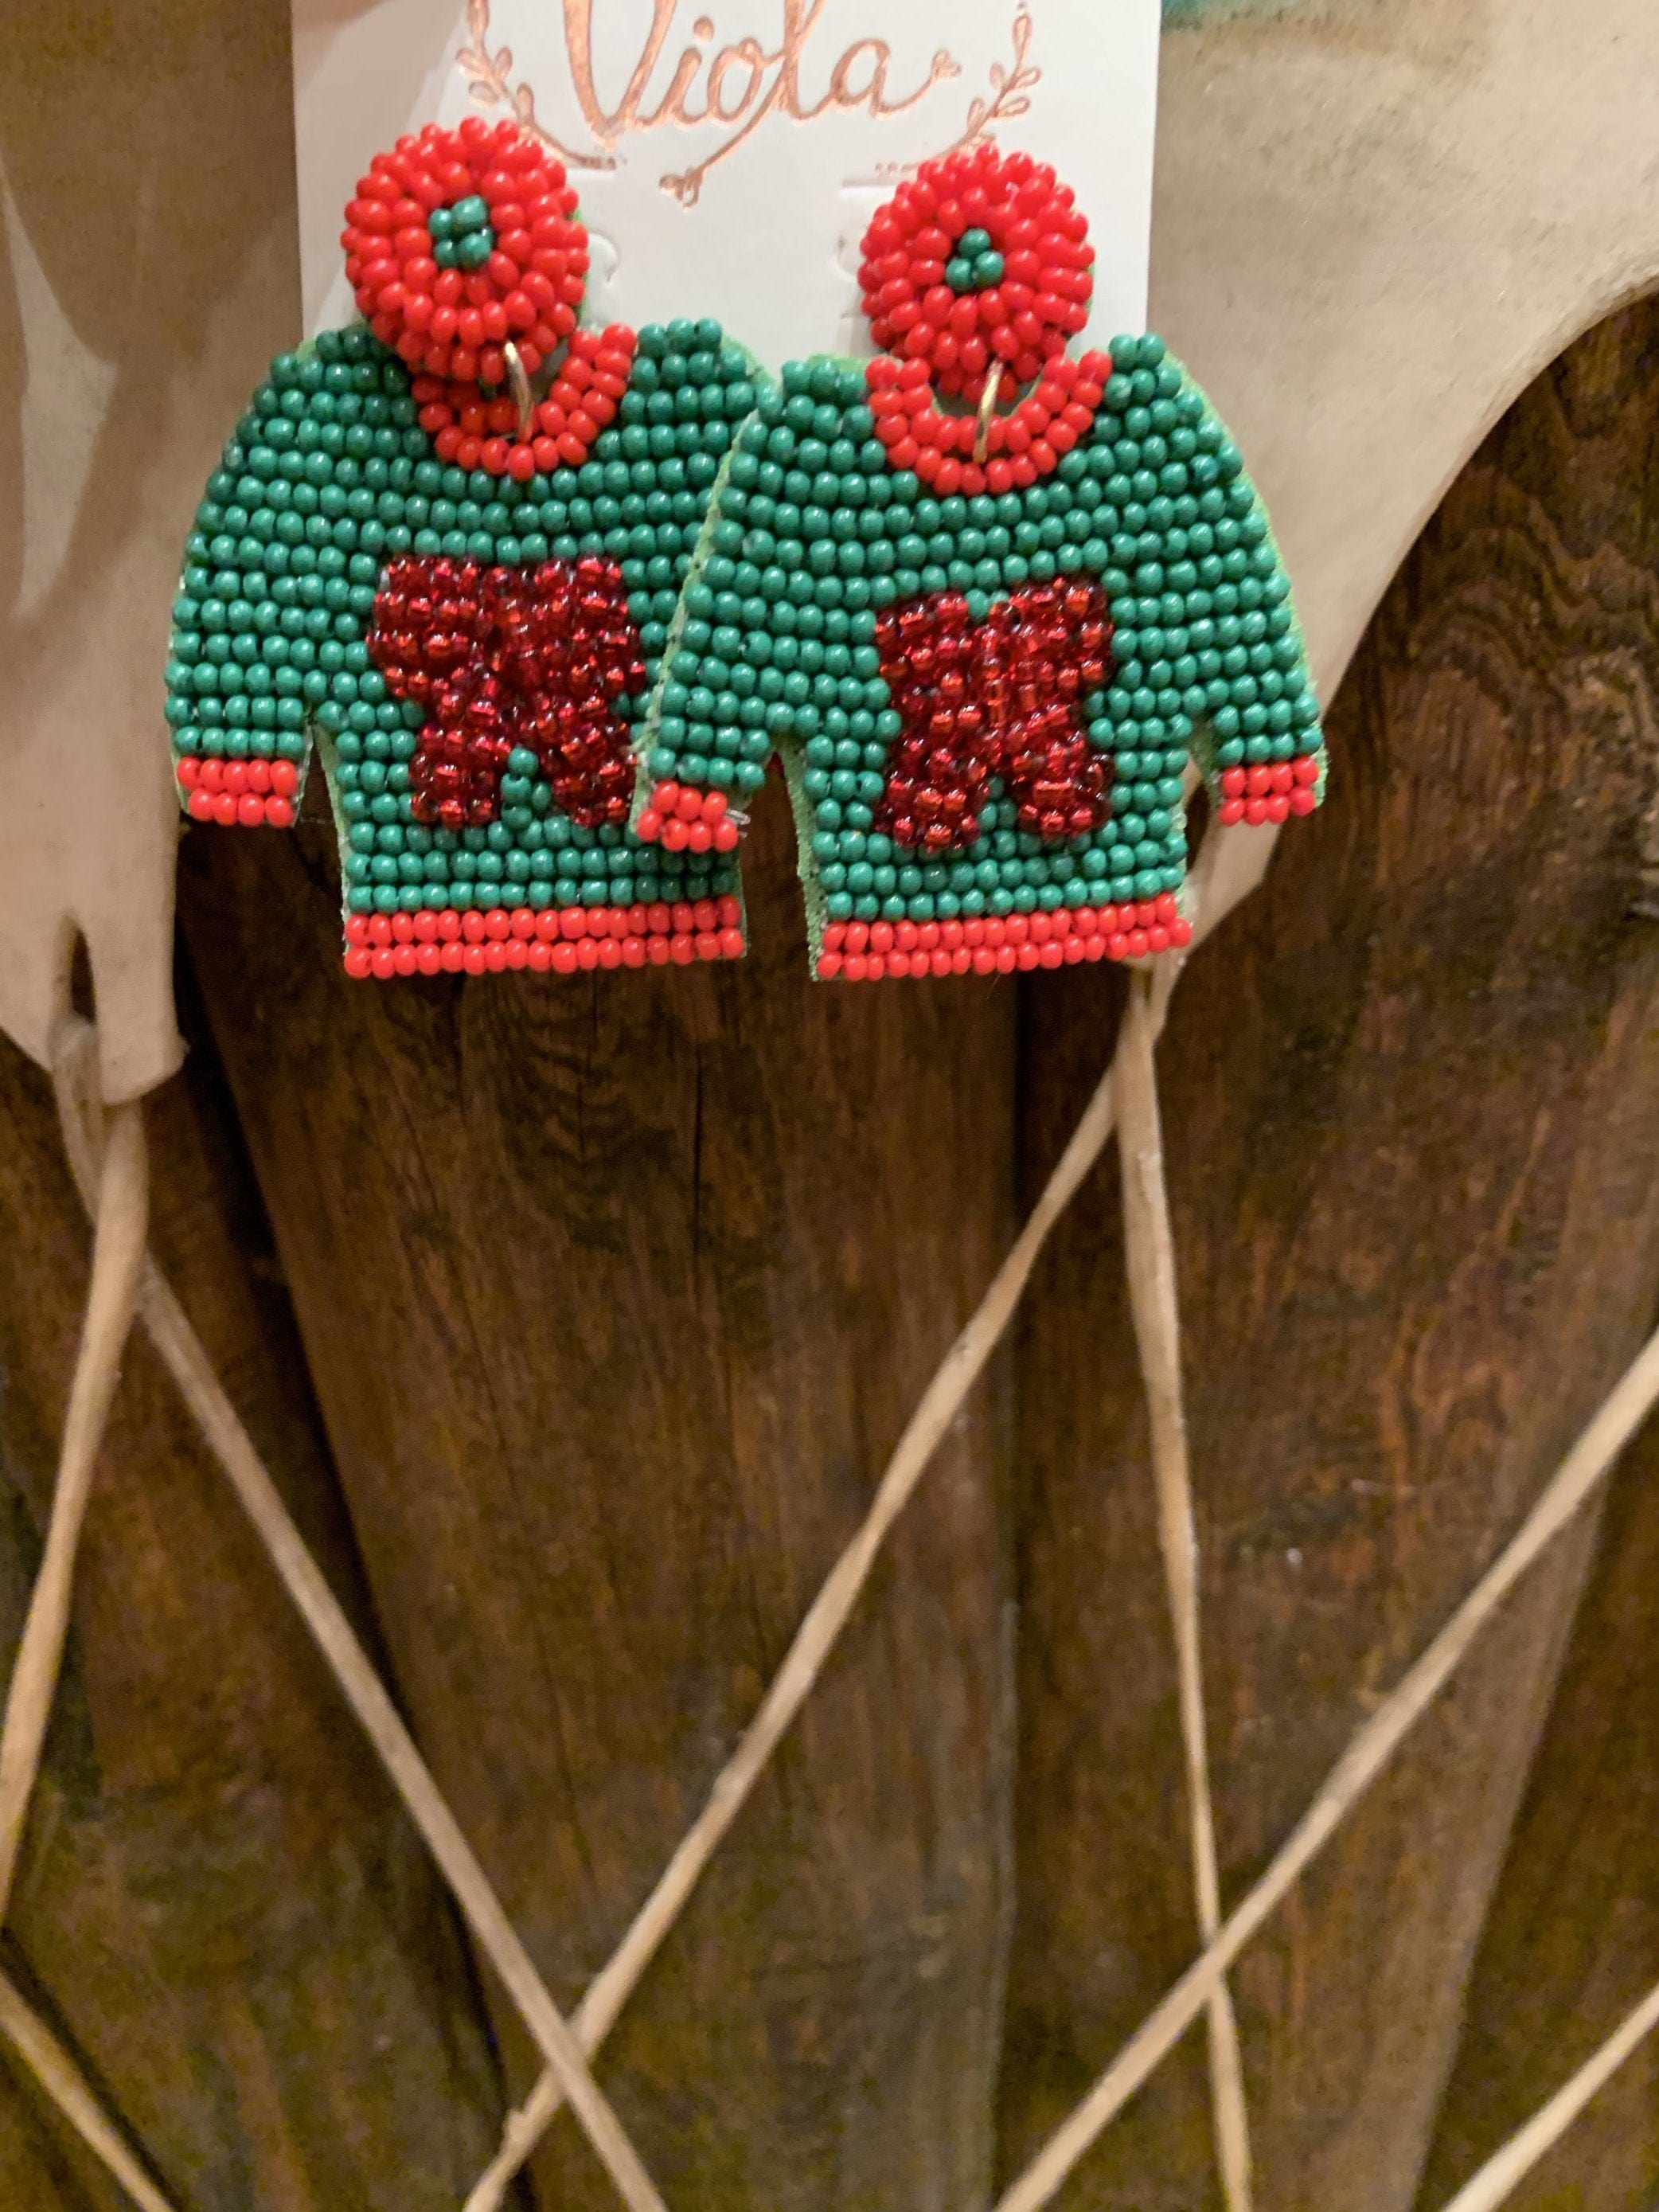 Beaded ugly sweater Christmas earrings Southwest Bedazzle jewelz